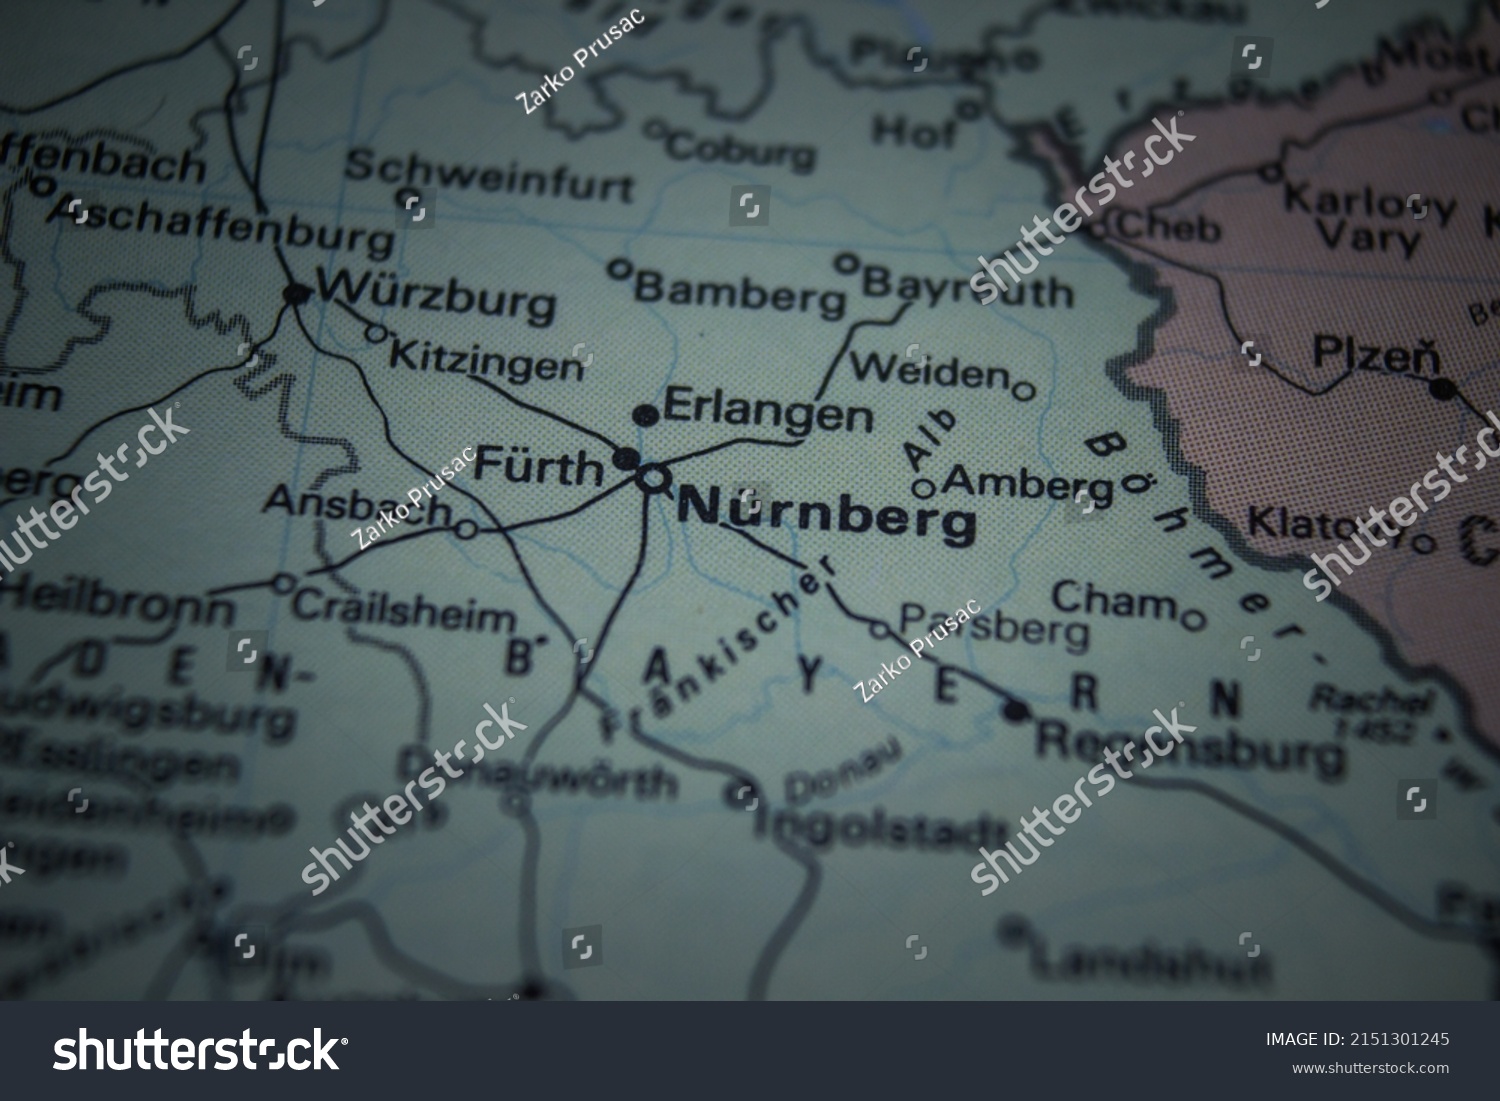 Stock Photo Nuremberg On World Political Map 2151301245 